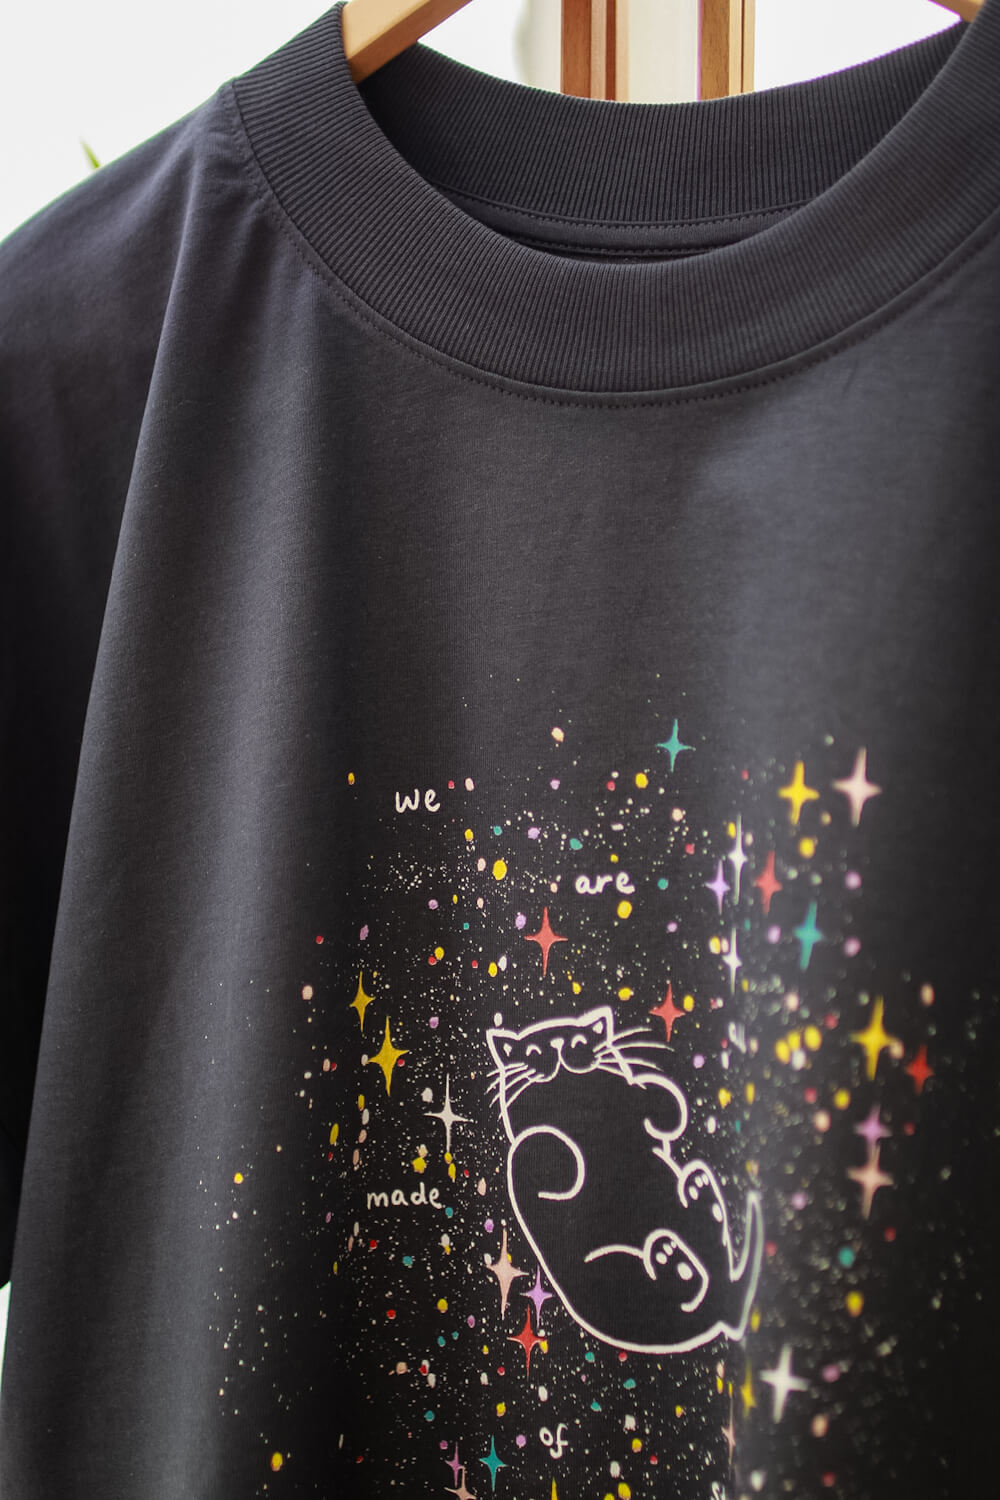 Stardust cat, oversized T-shirt